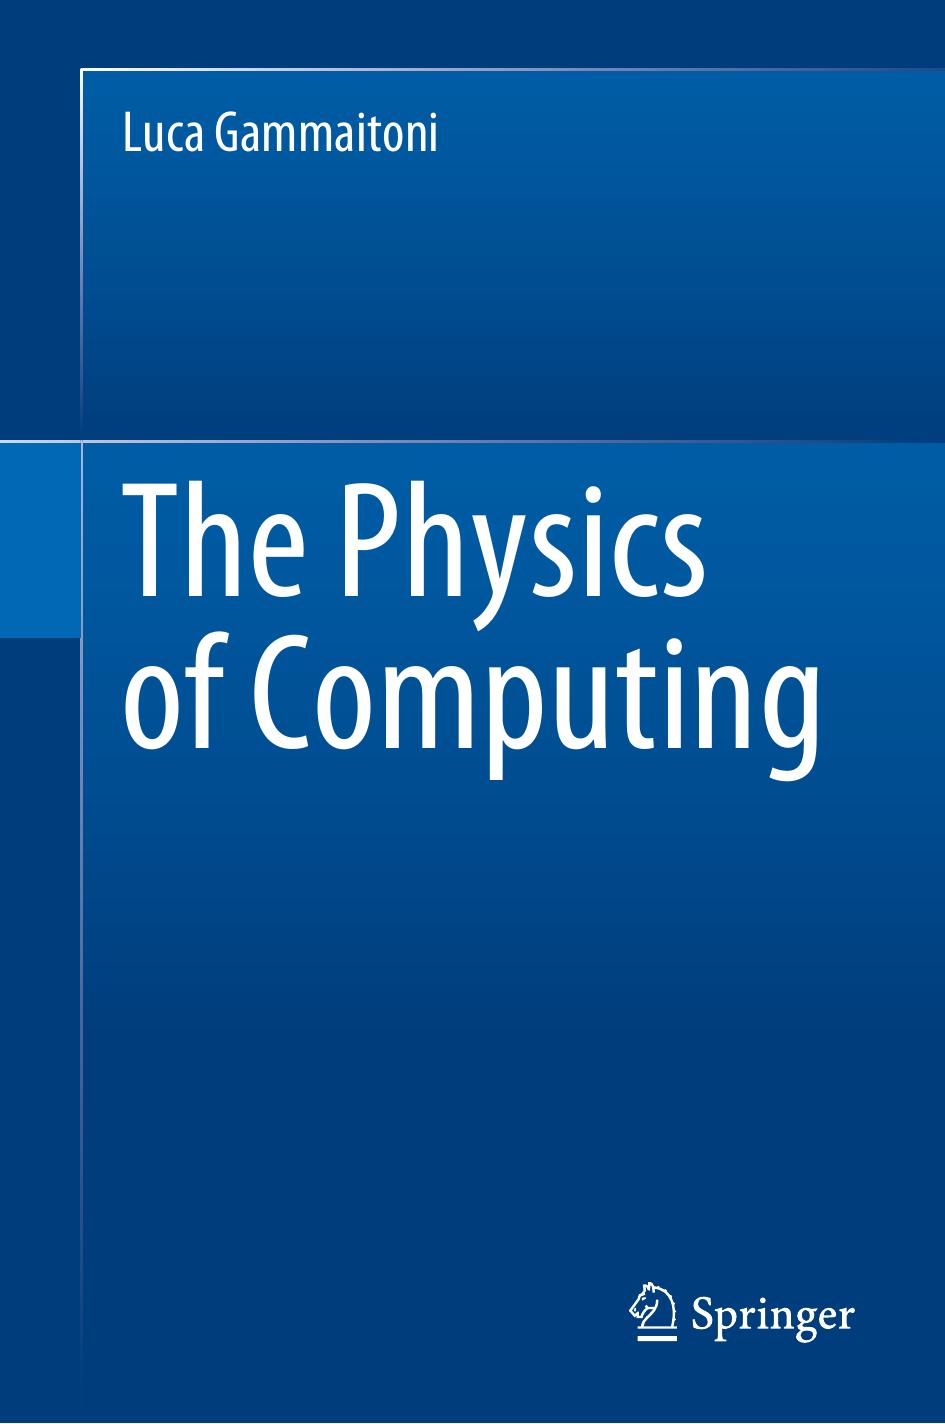 The Physics of Computing by Luca Gammaitoni